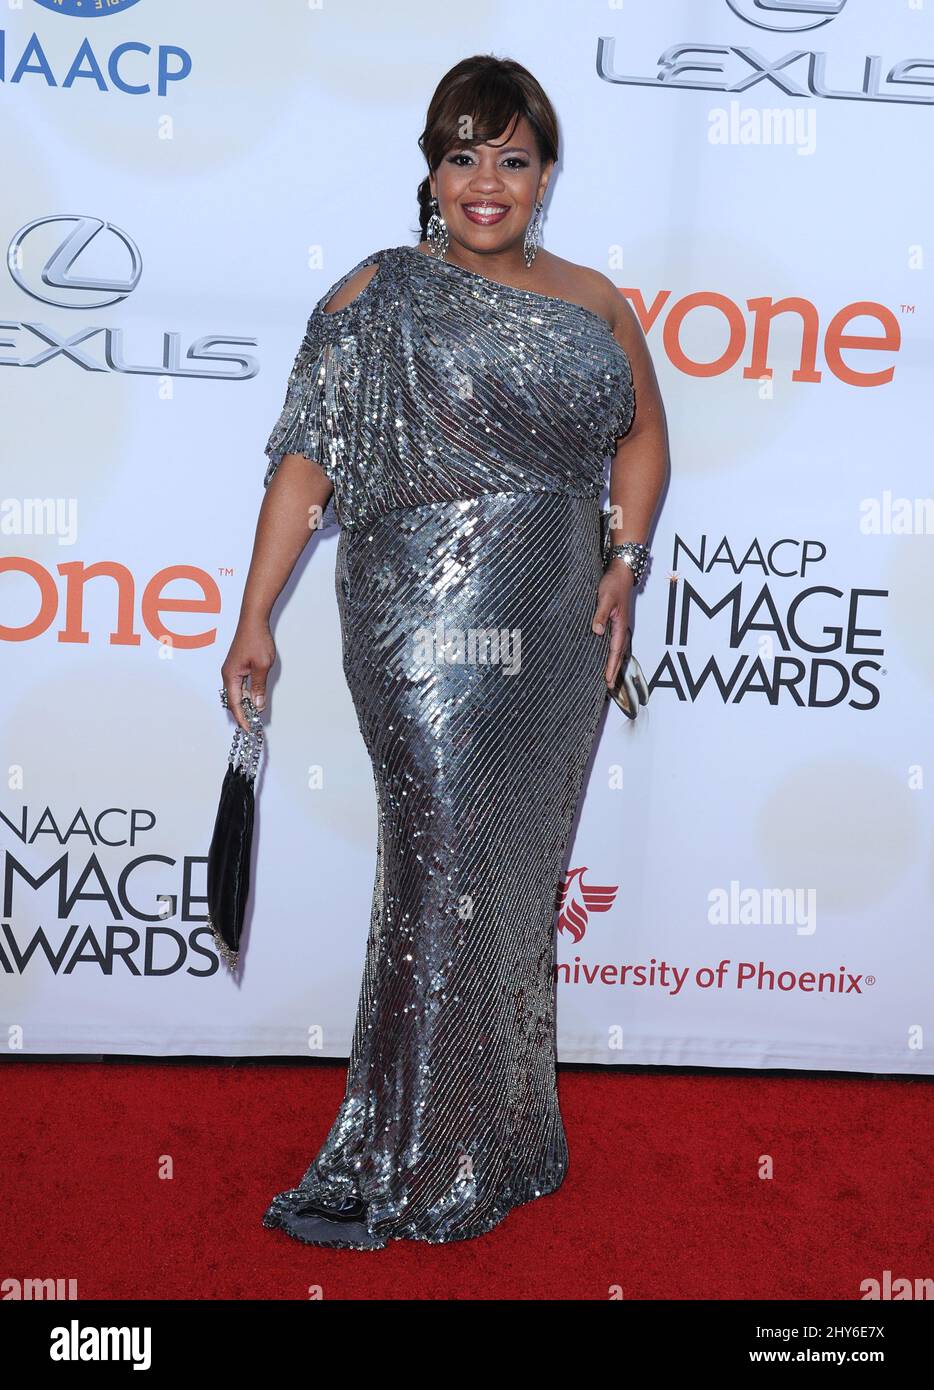 Chandra Wilson arriving at the 2015 NAACP Image Awards in Pasadena, California. Stock Photo